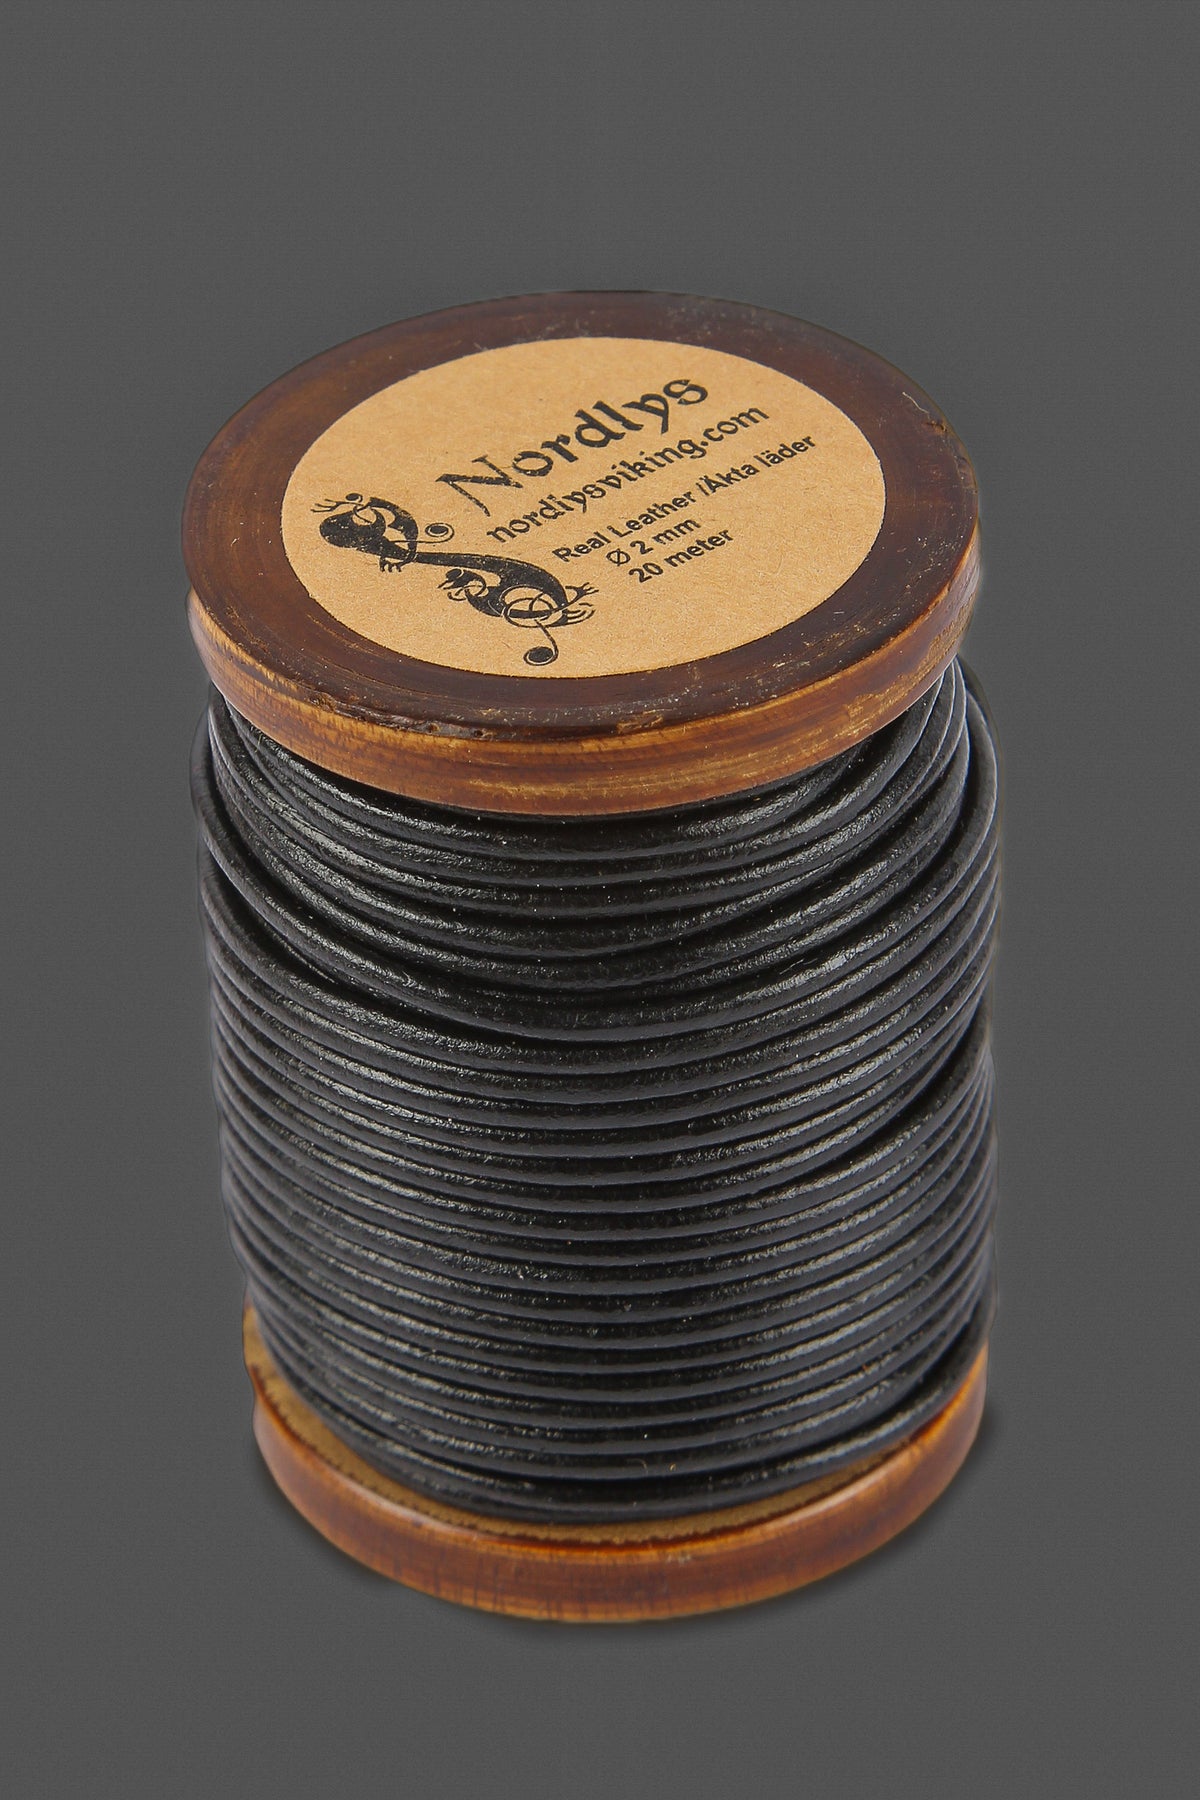 Leather string black, 2mm, 20m